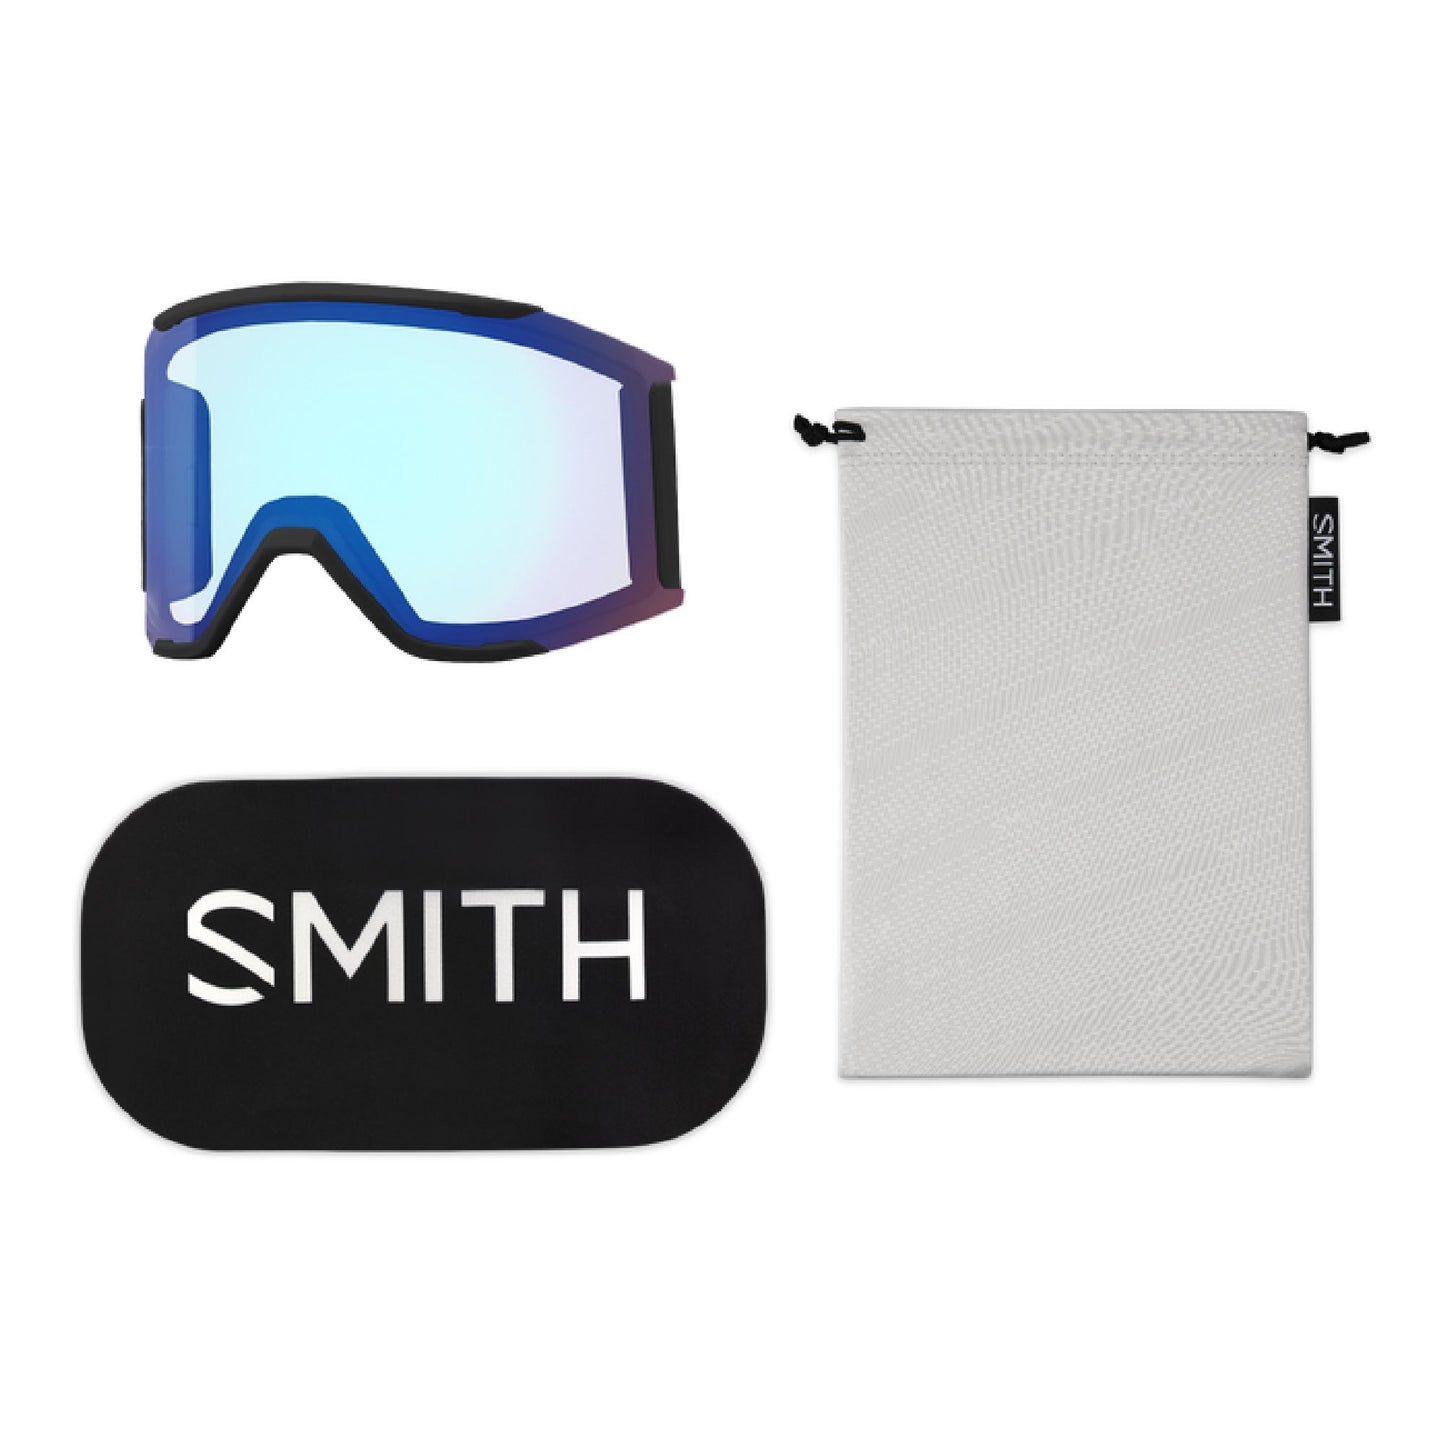 Smith Squad MAG Low Bridge Fit Snow Goggle Black ChromaPop Everyday Rose Gold Mirror Snow Goggles